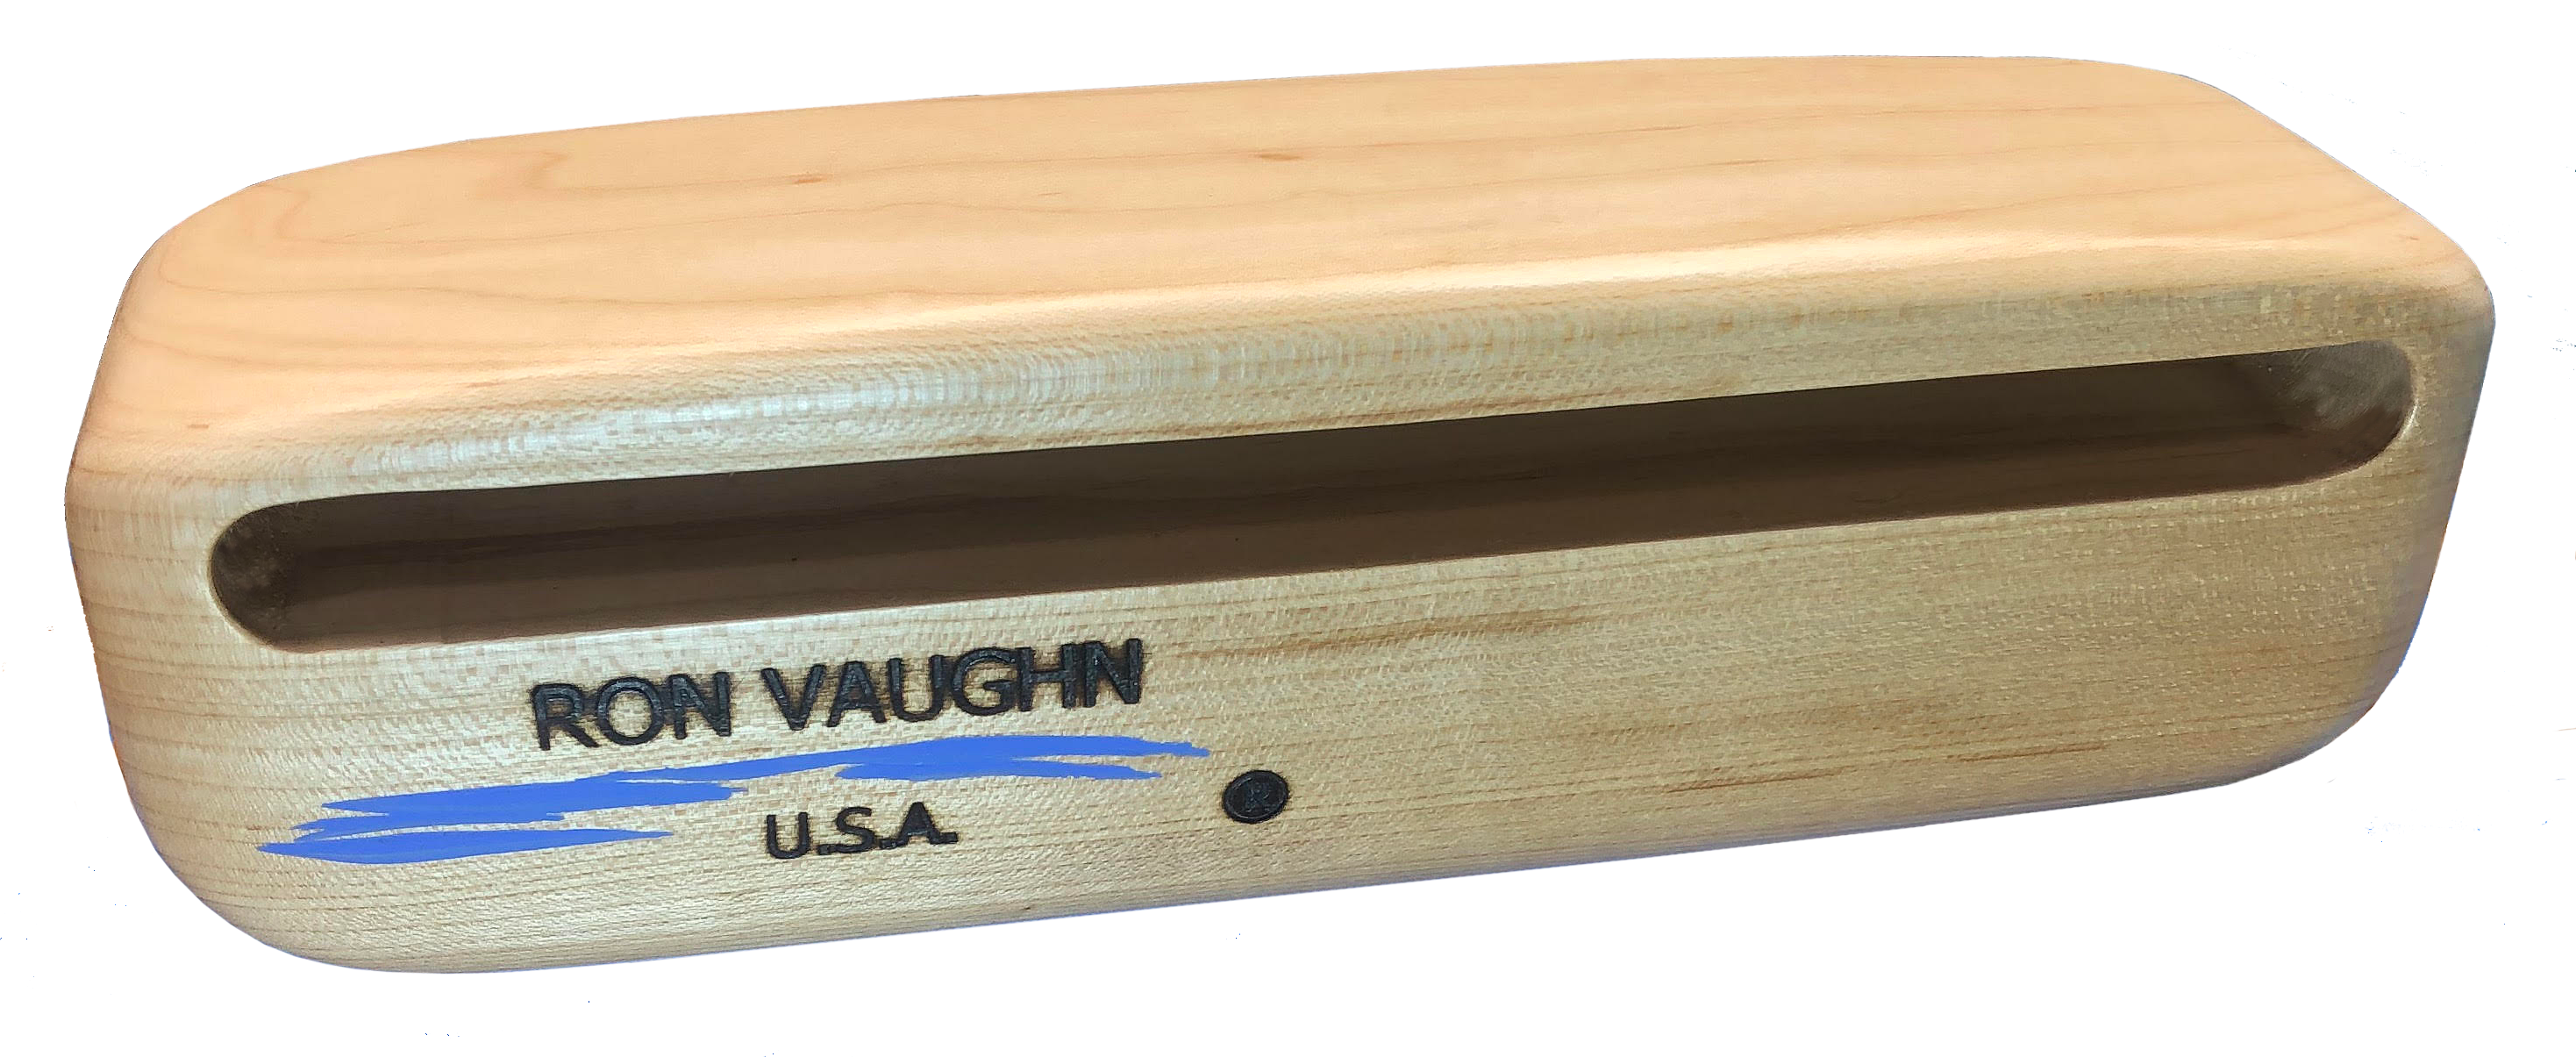 W-3 Voiced & Tuned Signature Wood Block